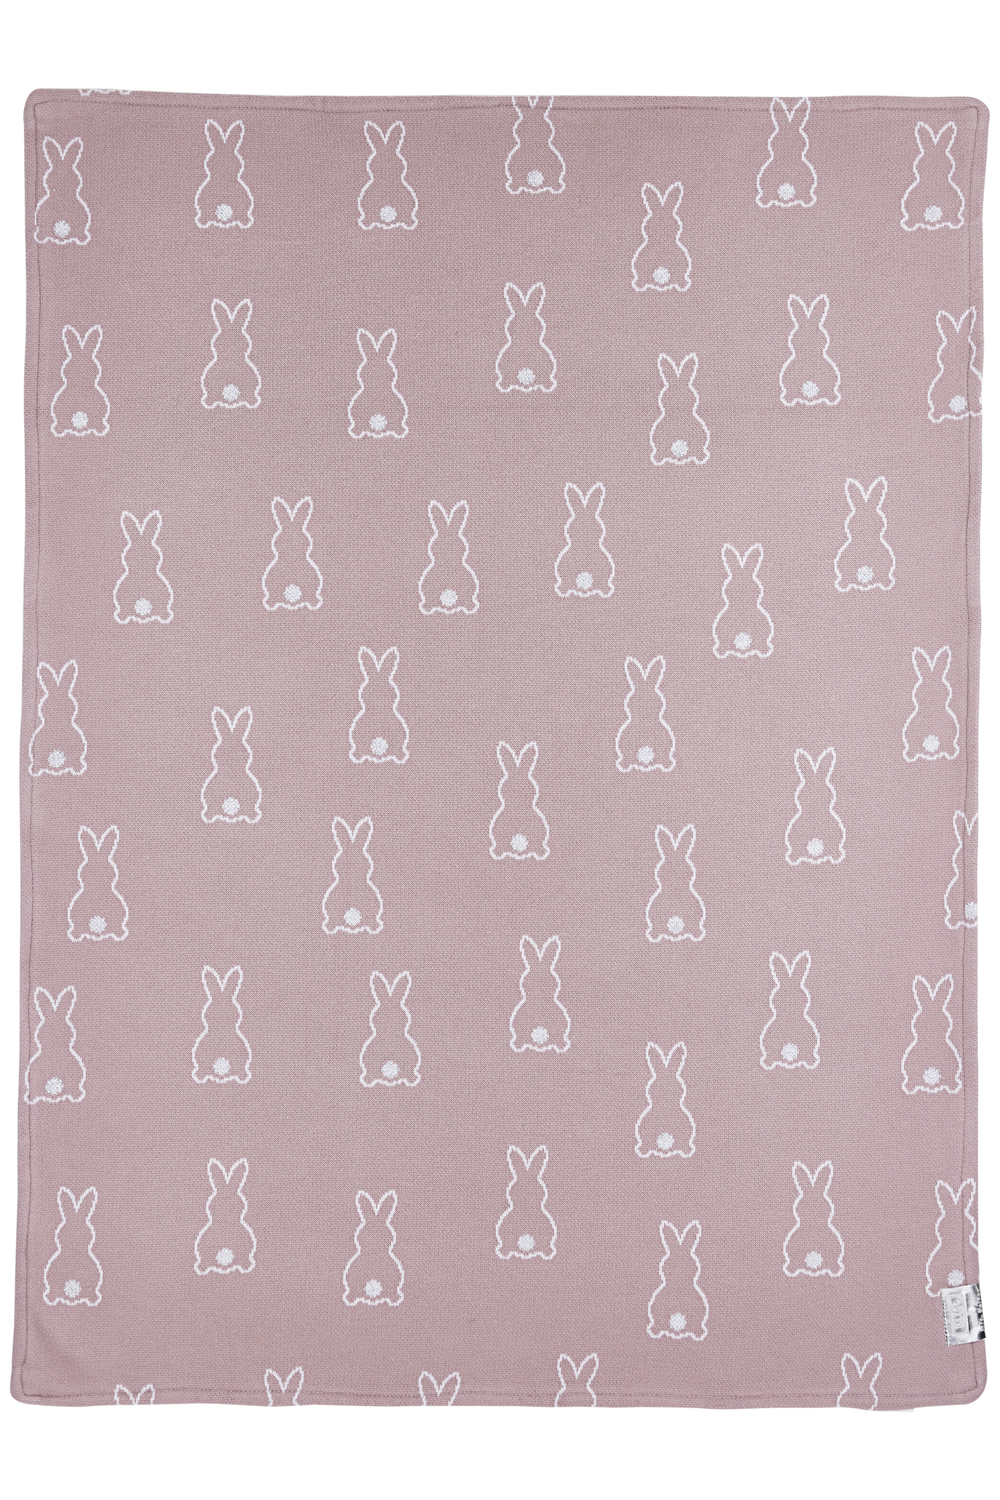 Cot bed blanket Rabbit velvet - lilac - 100x150cm